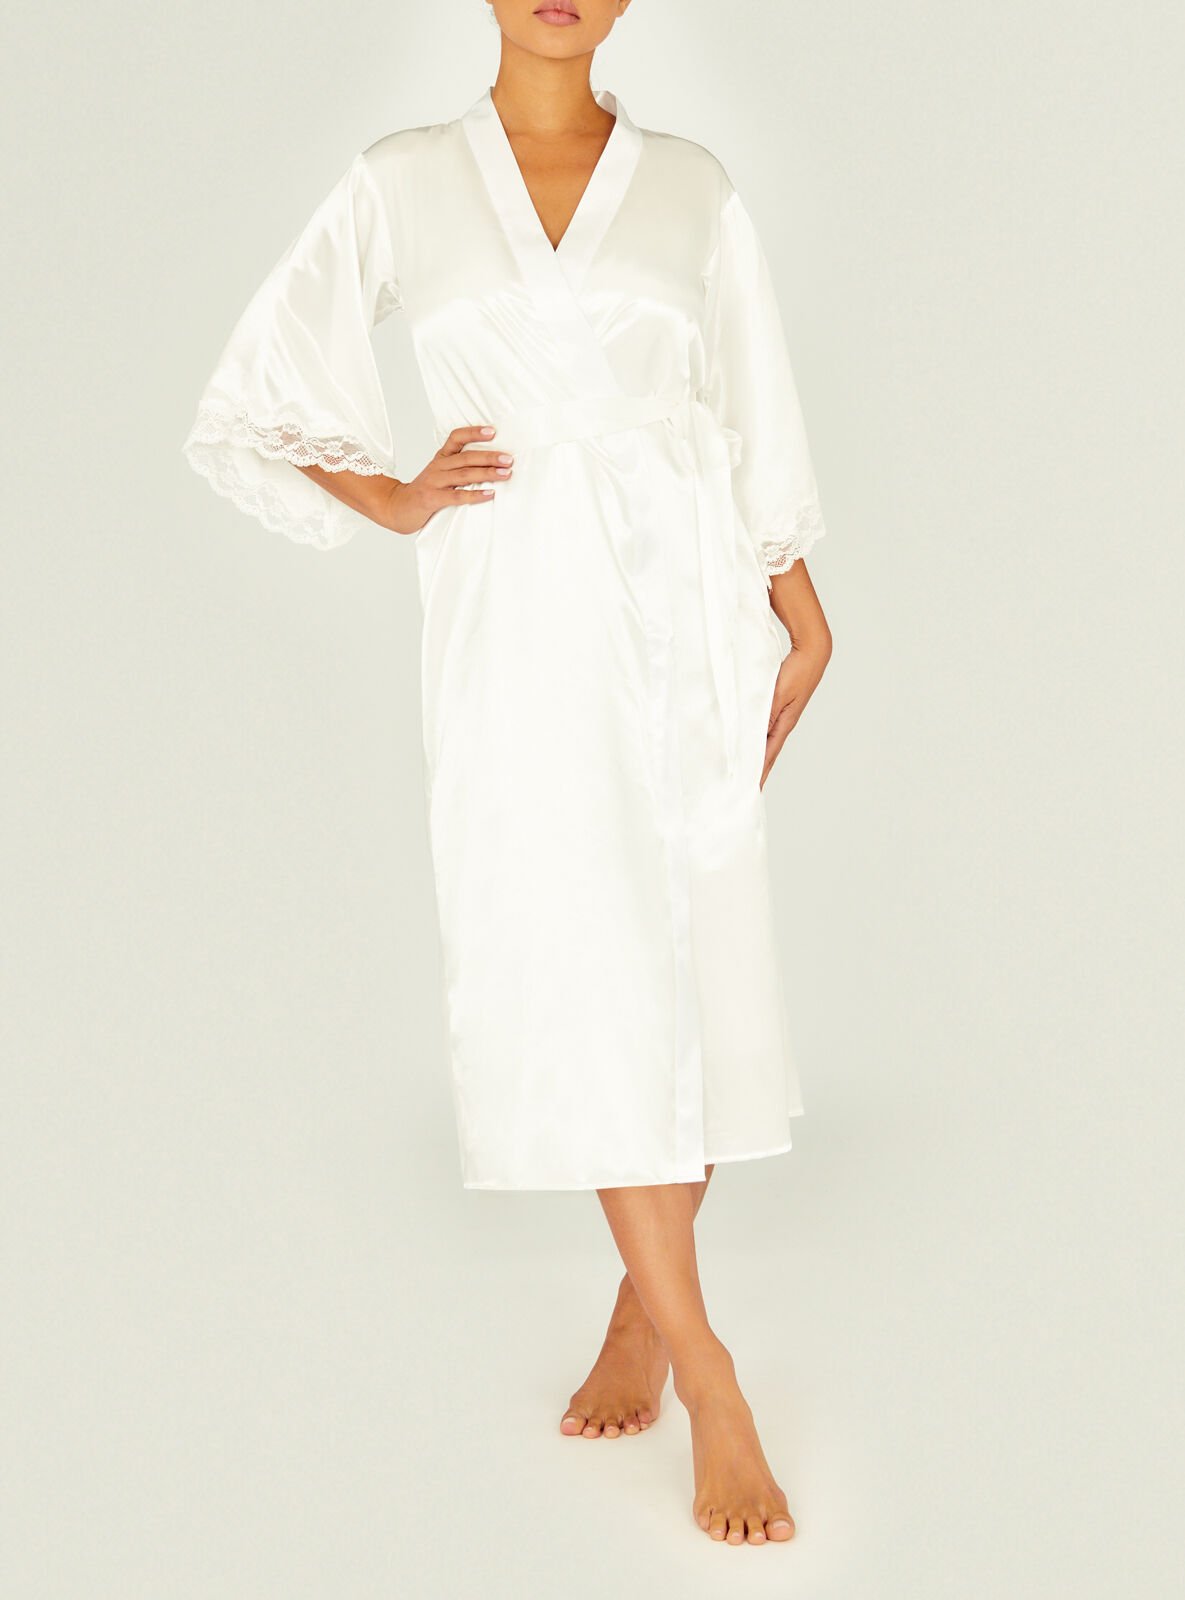 Penkiiy Simulated Silk Bathrobes Men Solid Casual Long Sleeves Lace-up Home  Pocket Long Pajama Robe White Nightgowns - Walmart.com